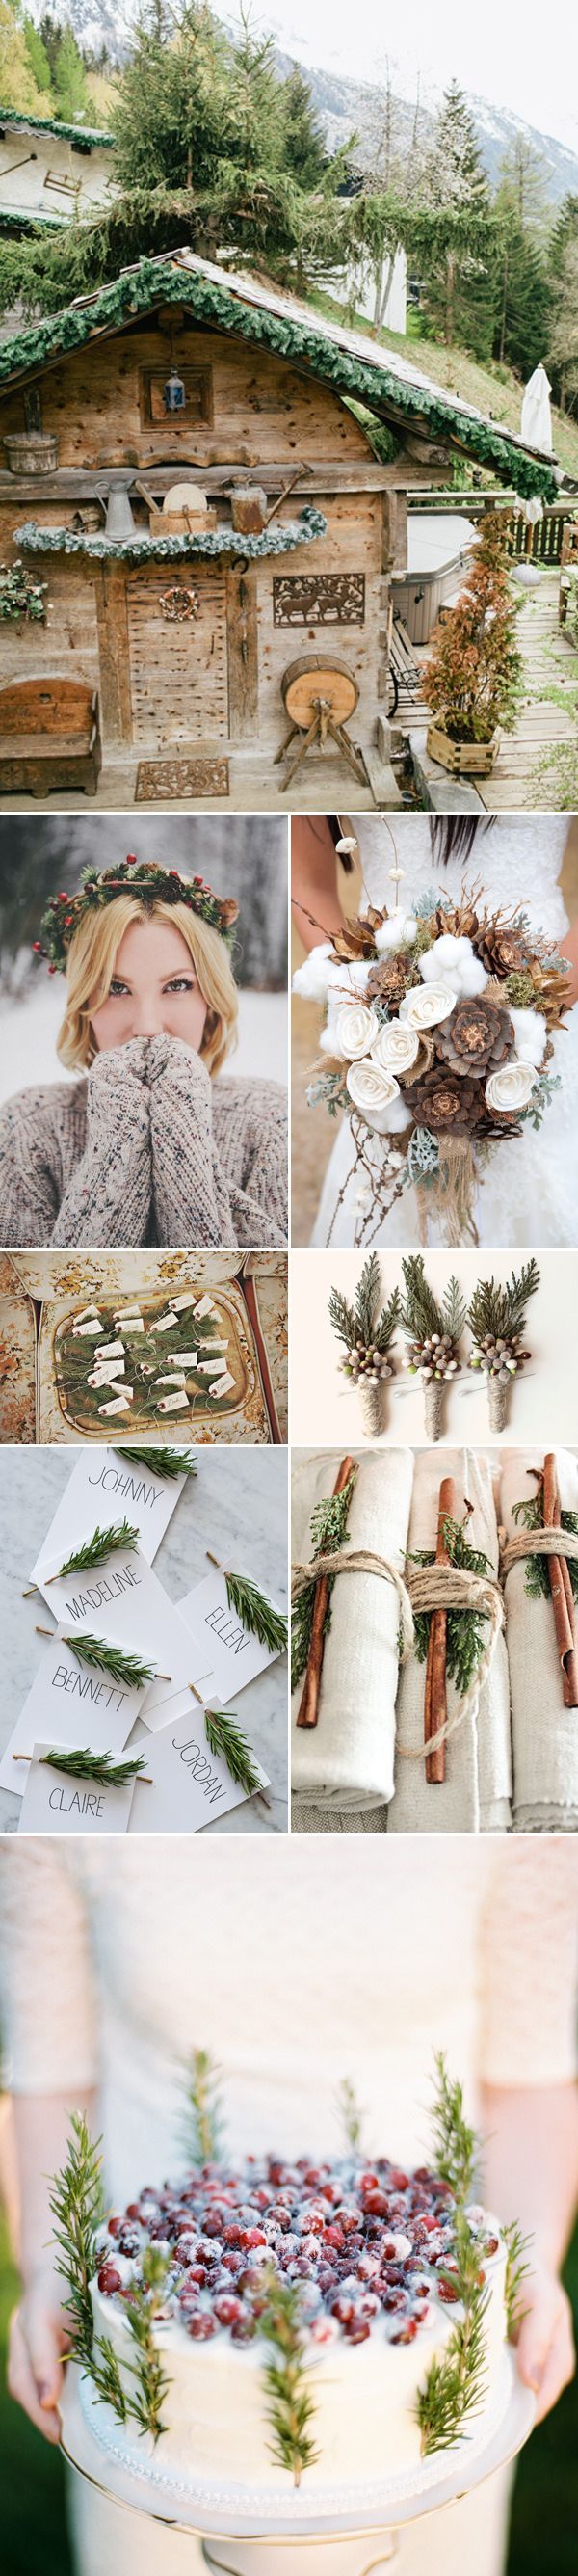 Rustic Mountain Winter Wedding Ideas and Inspiration | via junebugweddings – my